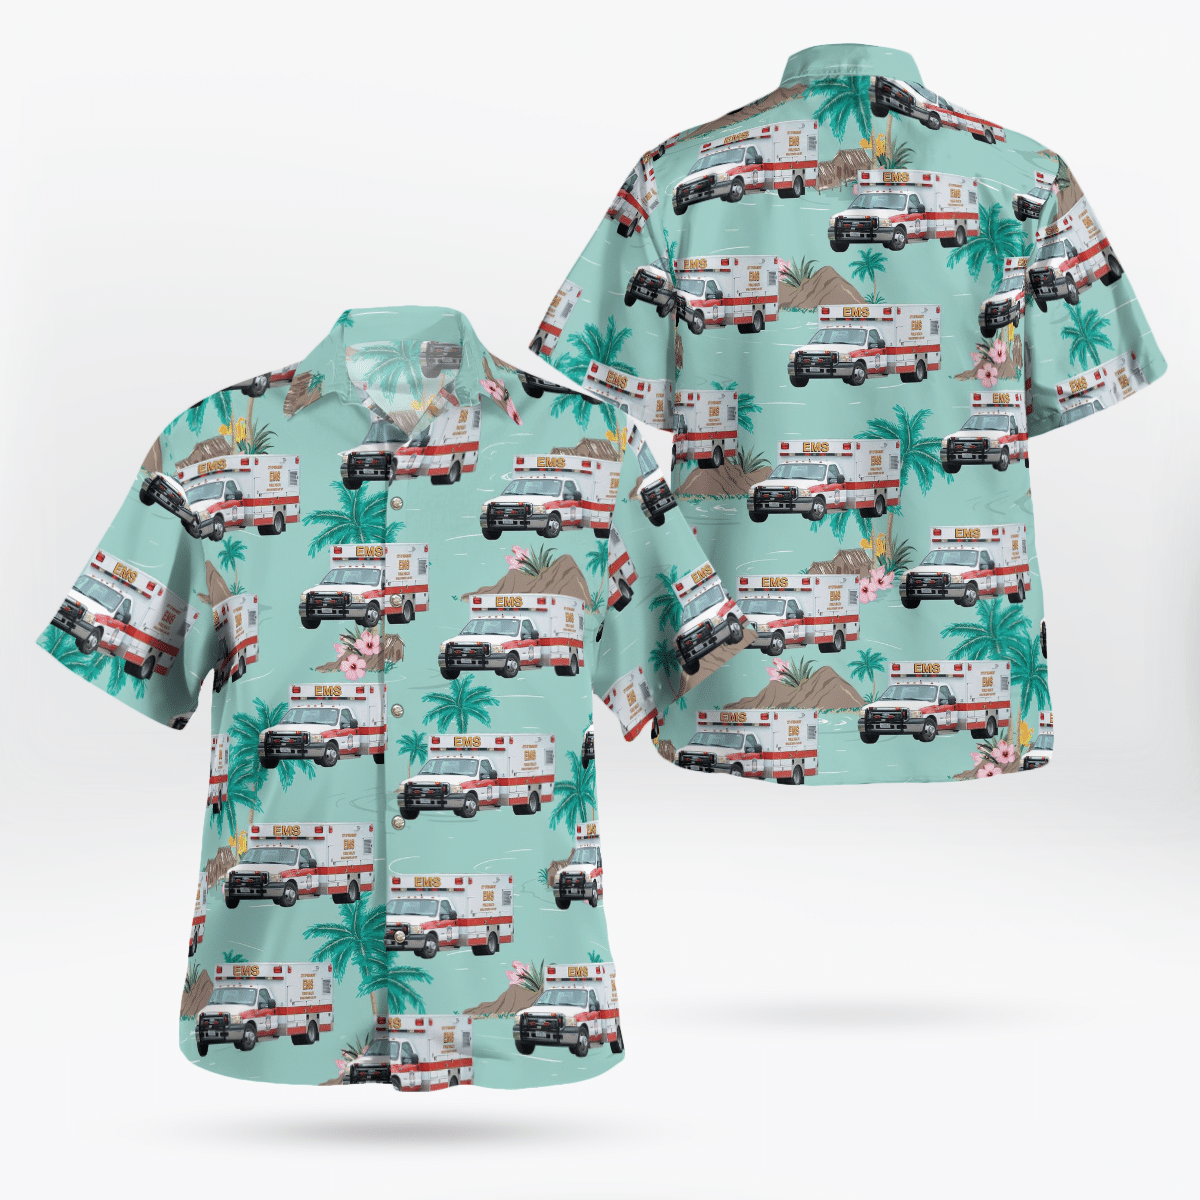 Why don't you order Hot Hawaiian Shirt today? 385